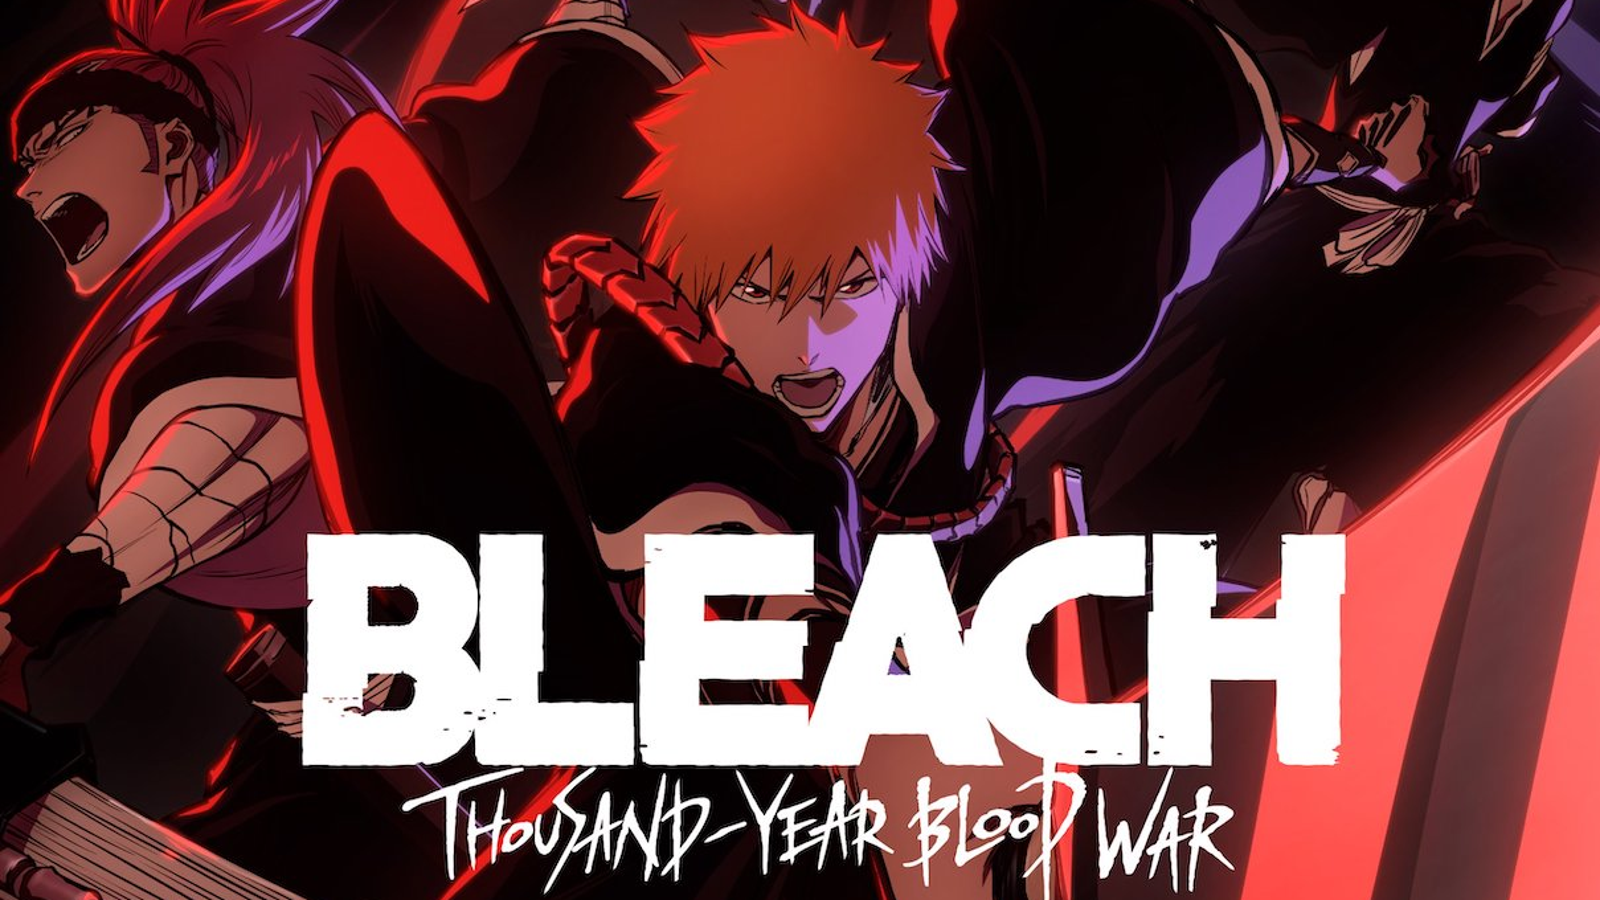 Bleach Thousand Year Blood War Part 2 Episode 3 Watch Online